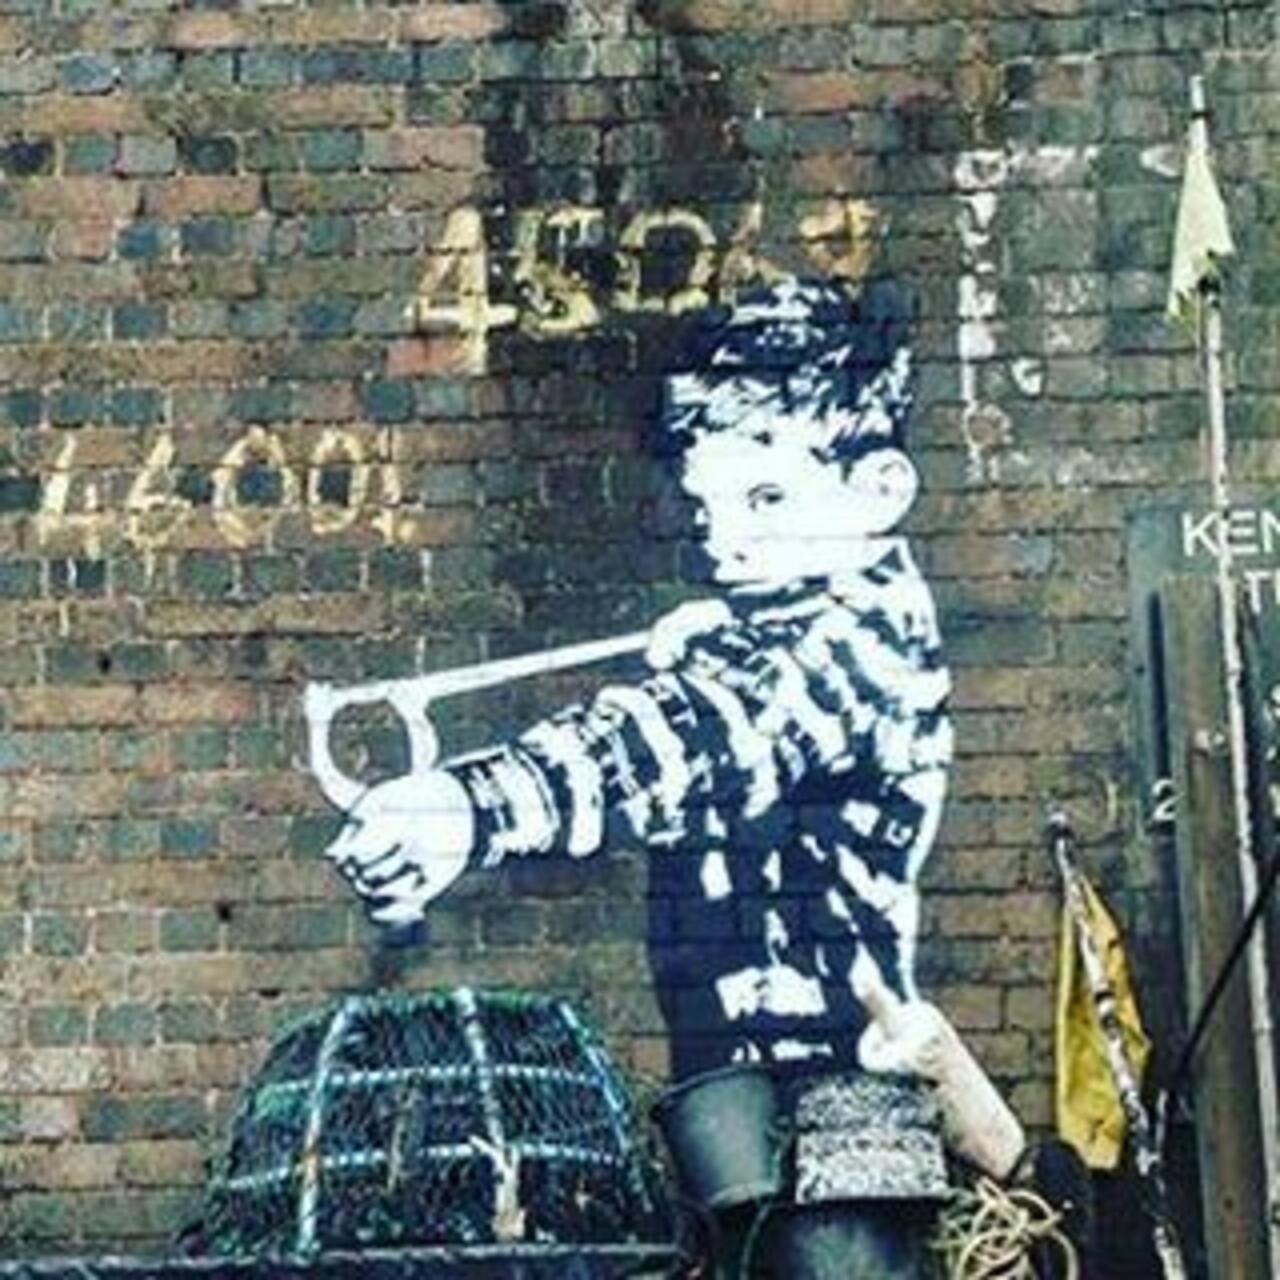 Nme #photoart #murales #mural #streetphotography #streetart... #InspireArt - - https://wp.me/p6qjkV-49u http://t.co/JgJex0yoOK